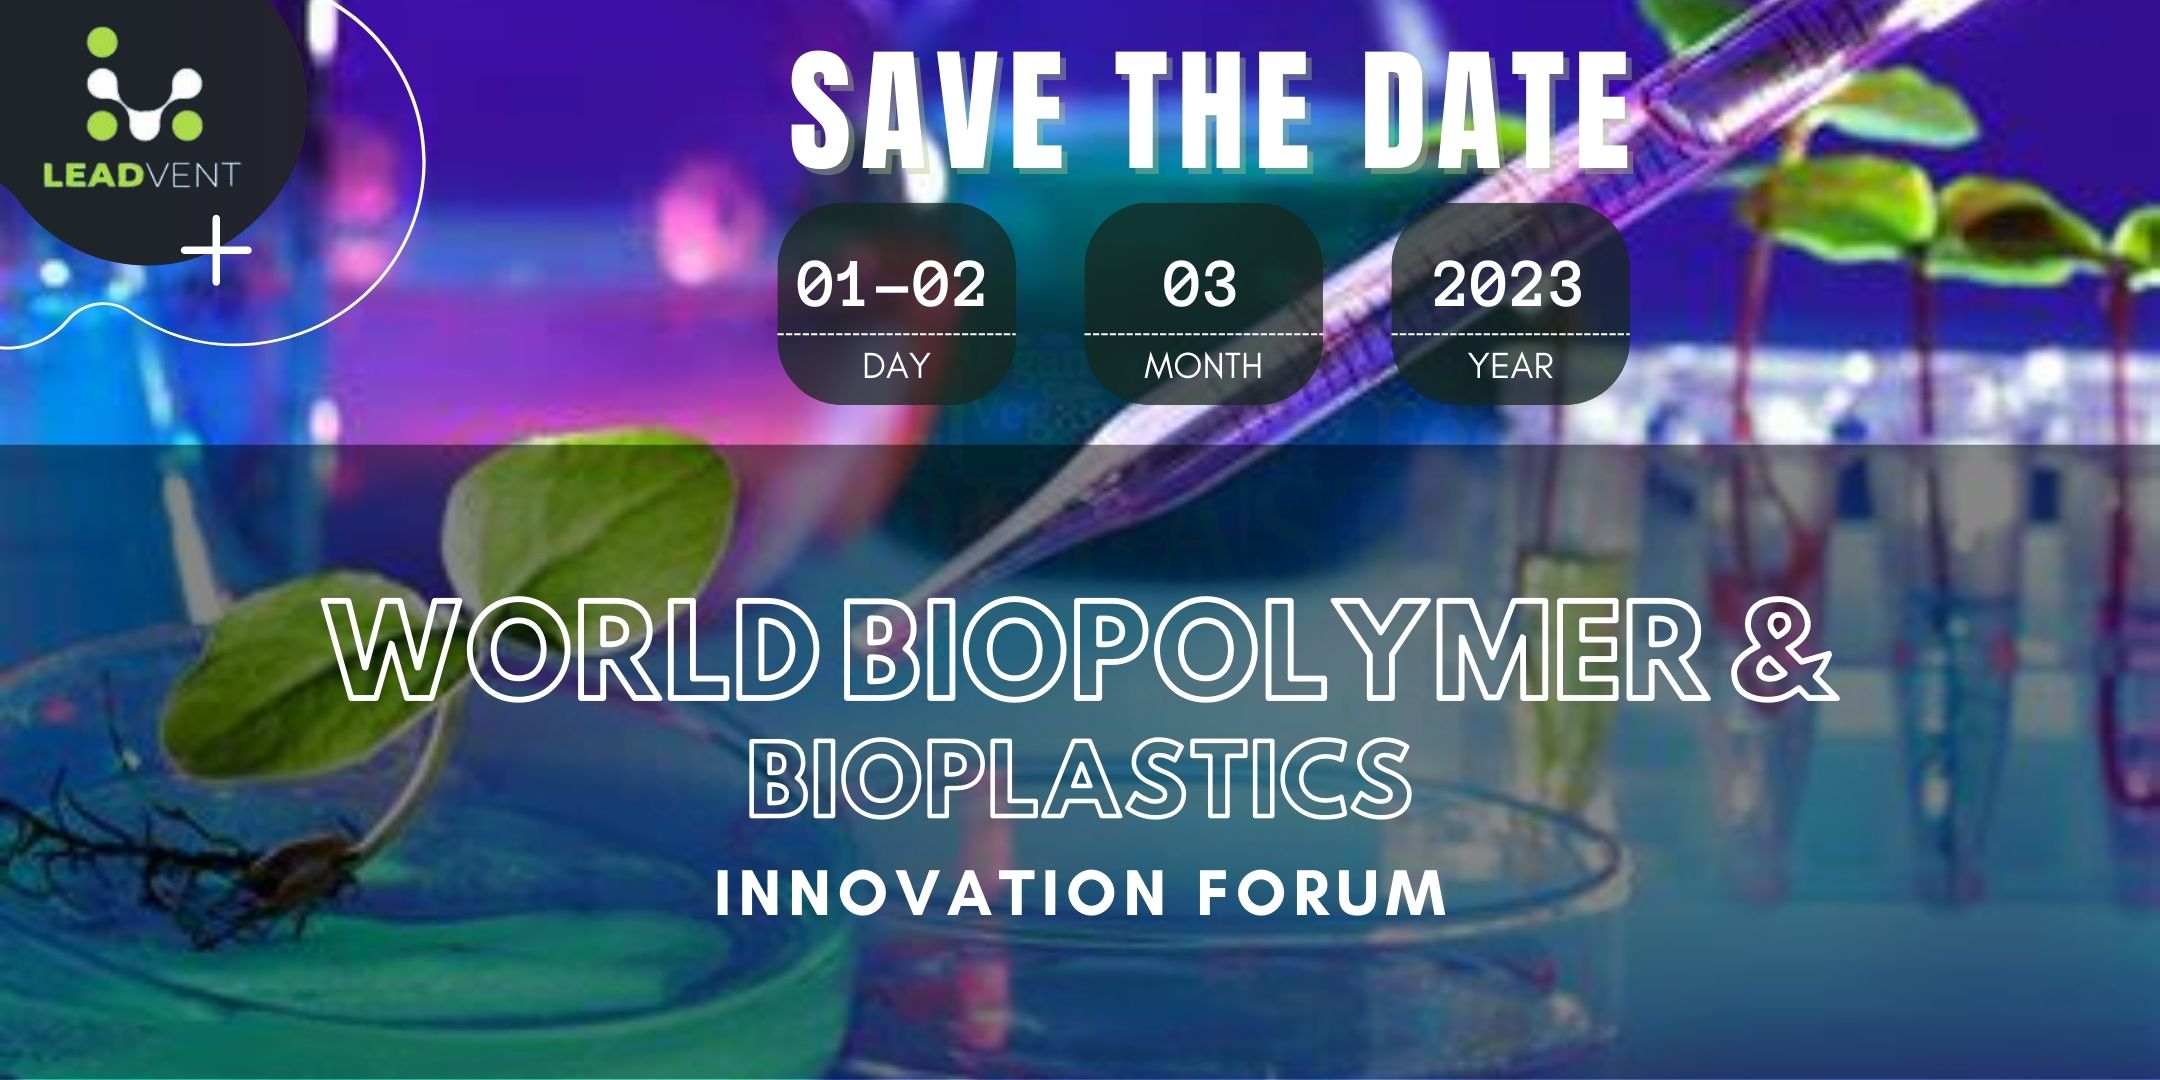 World Biopolymers and Bioplastics Innovation Forum  organized by Leadvent Group